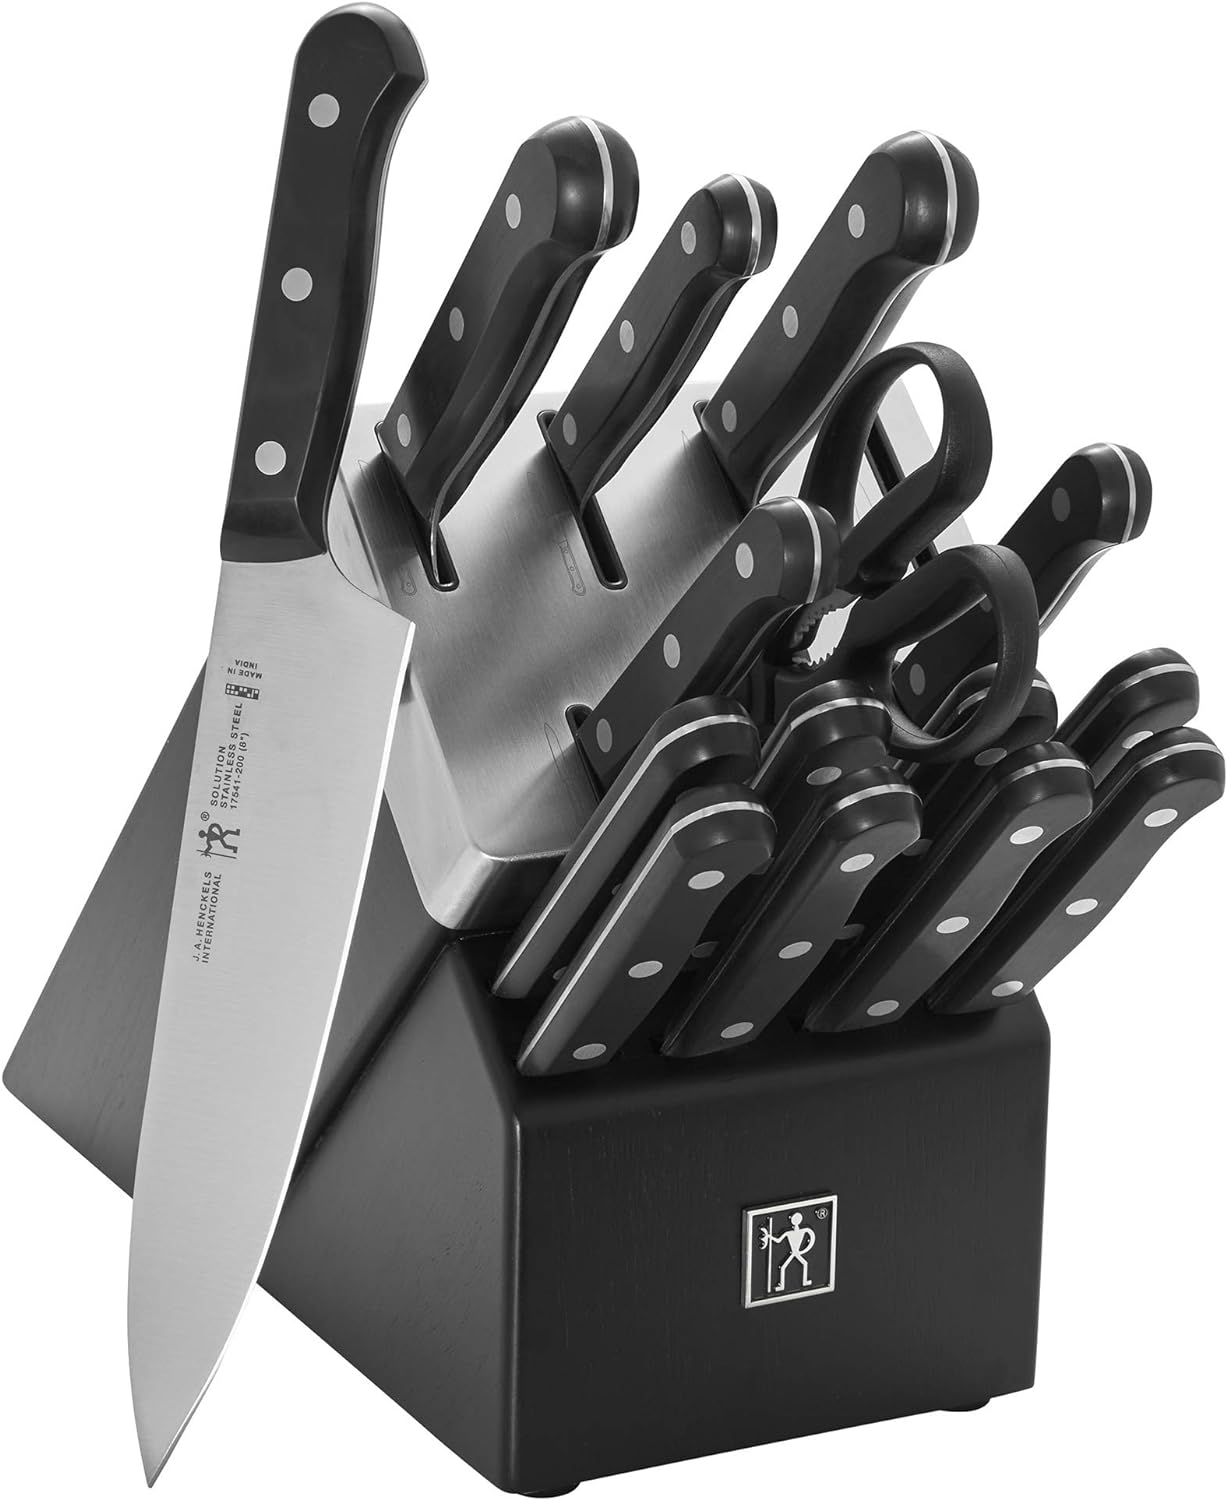 Henckels Self Sharpening Knife Set Review